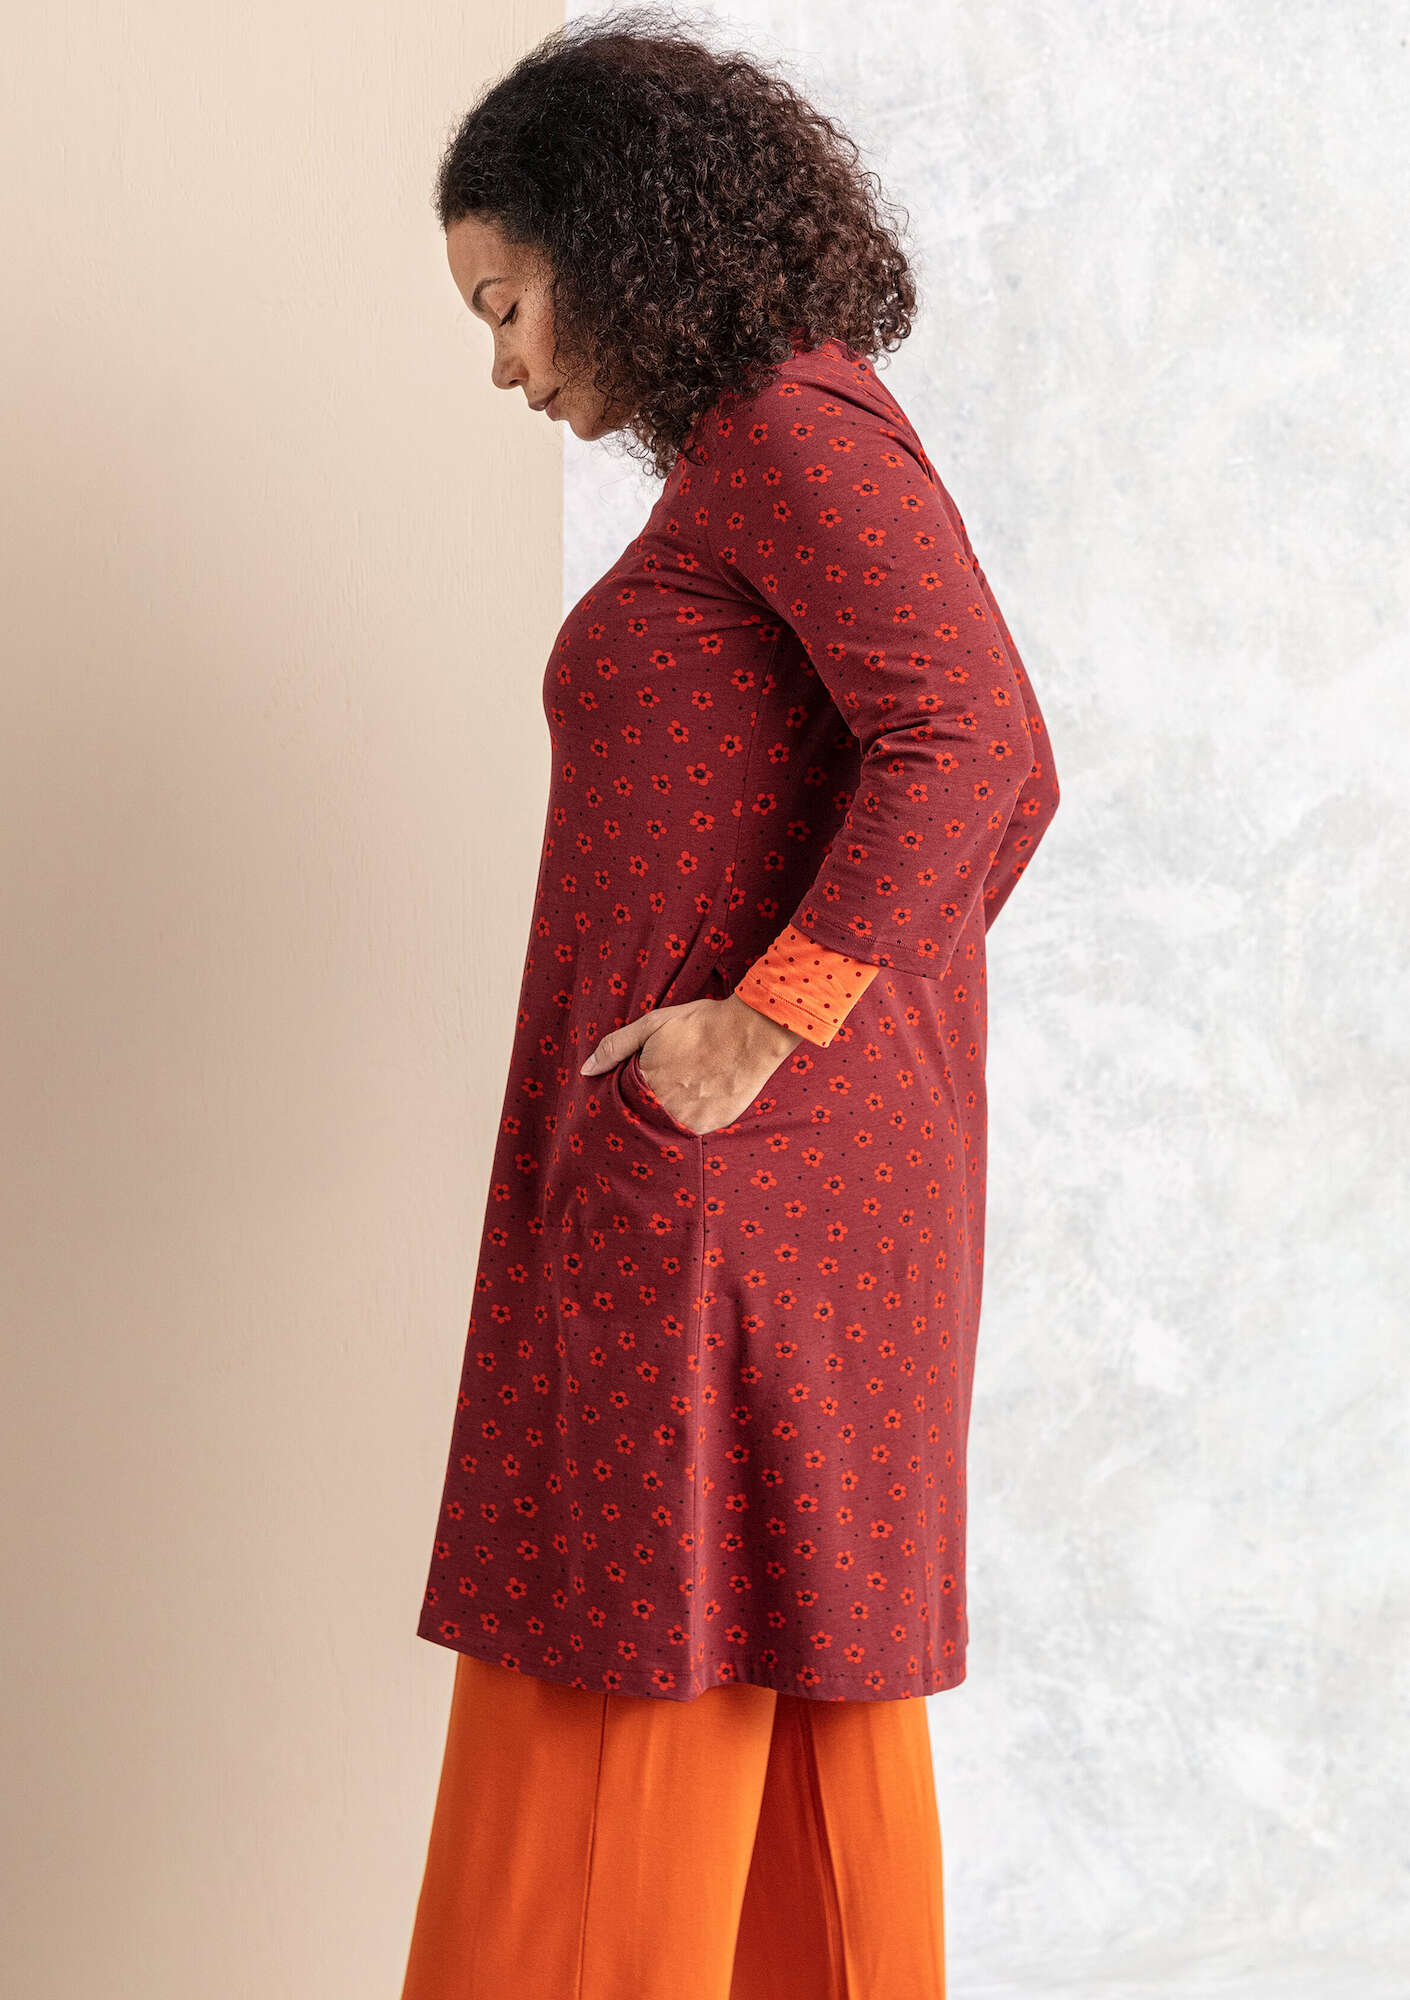 “Belle” organic cotton/elastane jersey dress agate red/patterned thumbnail